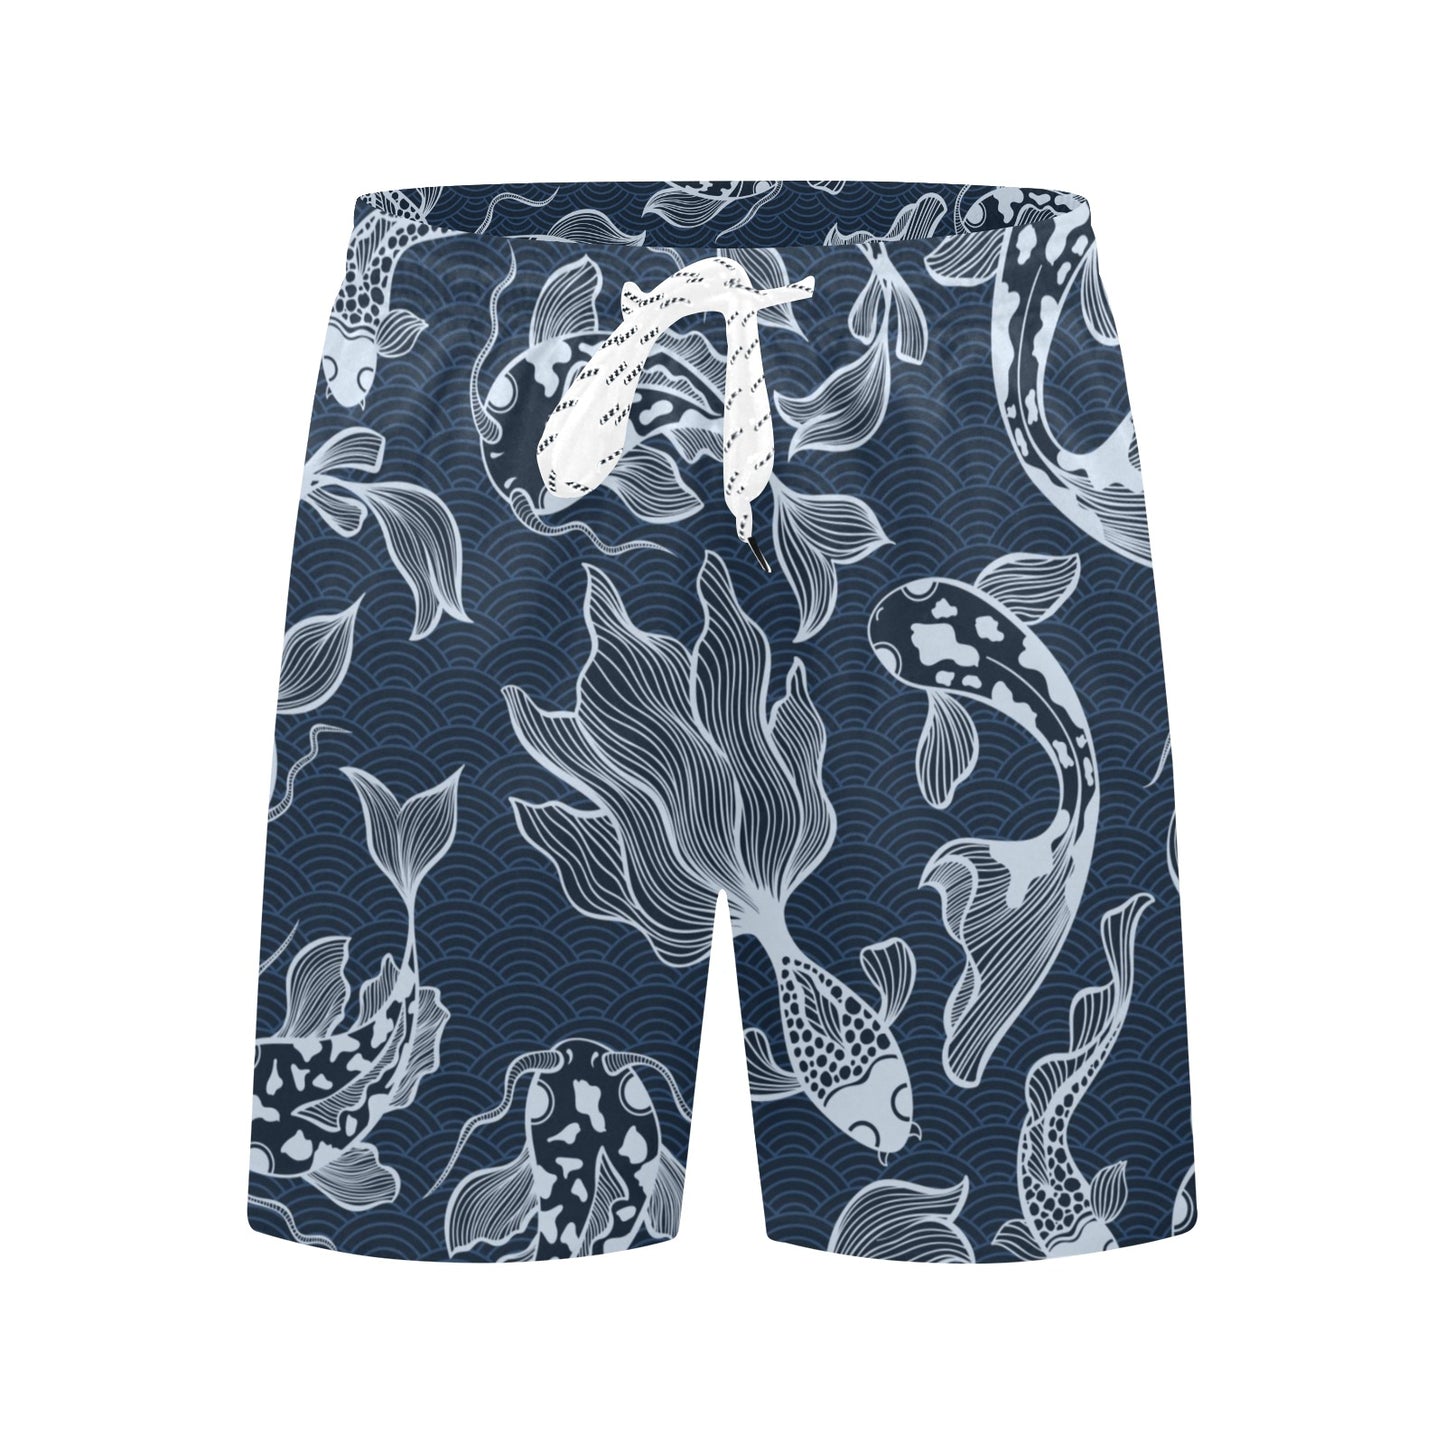 Blue Fish - Men's Mid-Length Beach Shorts Men's Mid-Length Beach Shorts animal